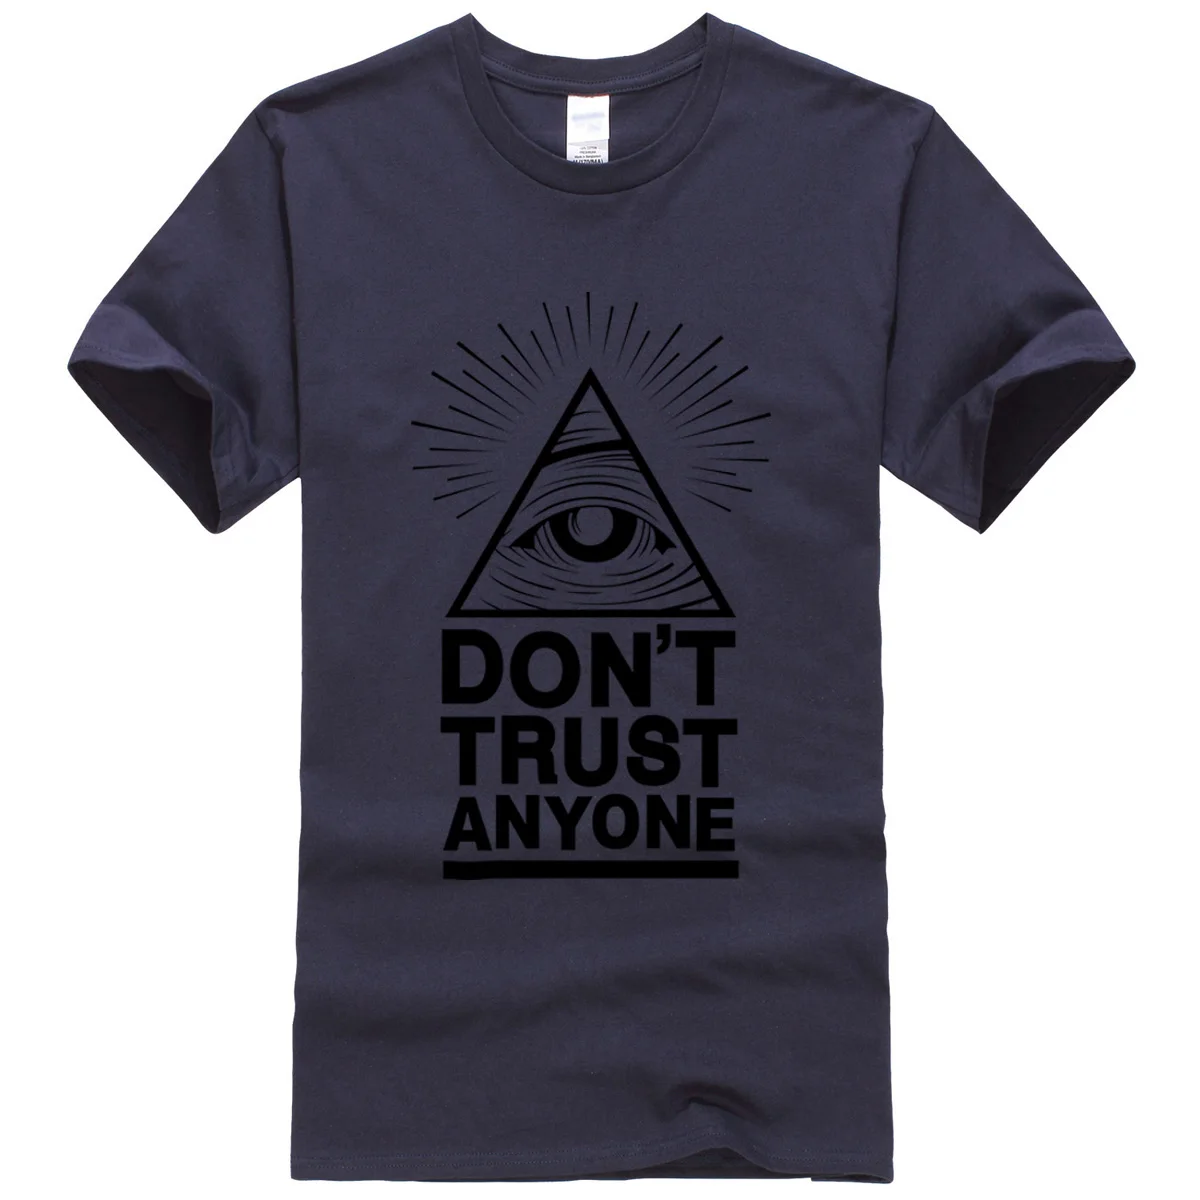 Лето, новинка, мужские футболки, Dont Trust Anyone Illuminati All Seeing Eye, футболка с буквенным принтом, Мужская футболка, повседневные топы, футболки - Цвет: dark blue1